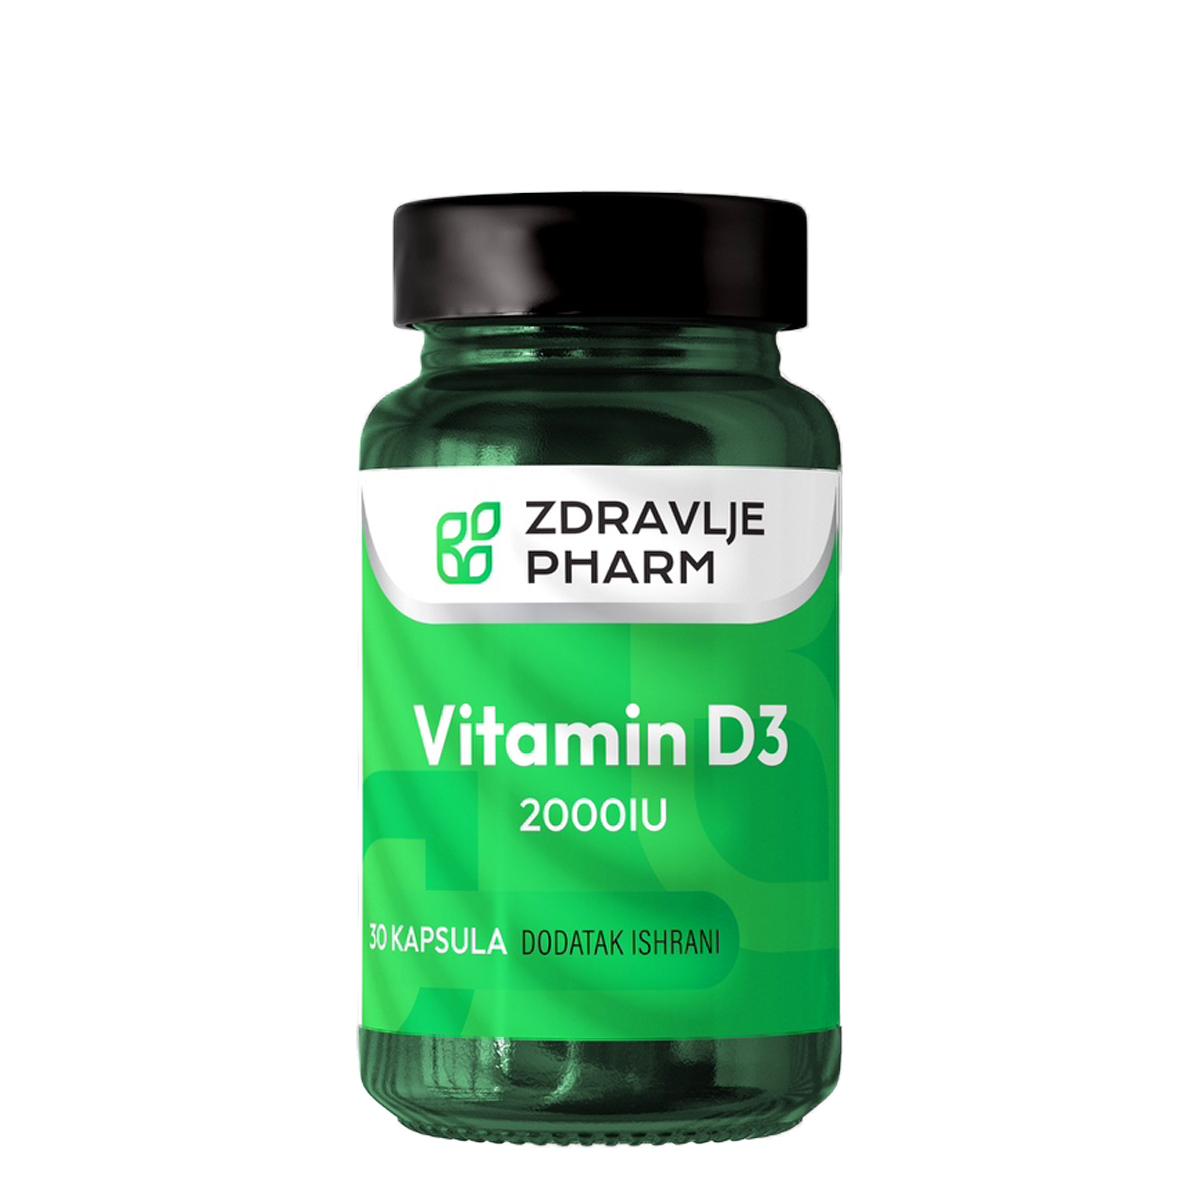 Selected image for ZDRAVLJE PHARM Vitamin D3 2000IU 30 kapsula